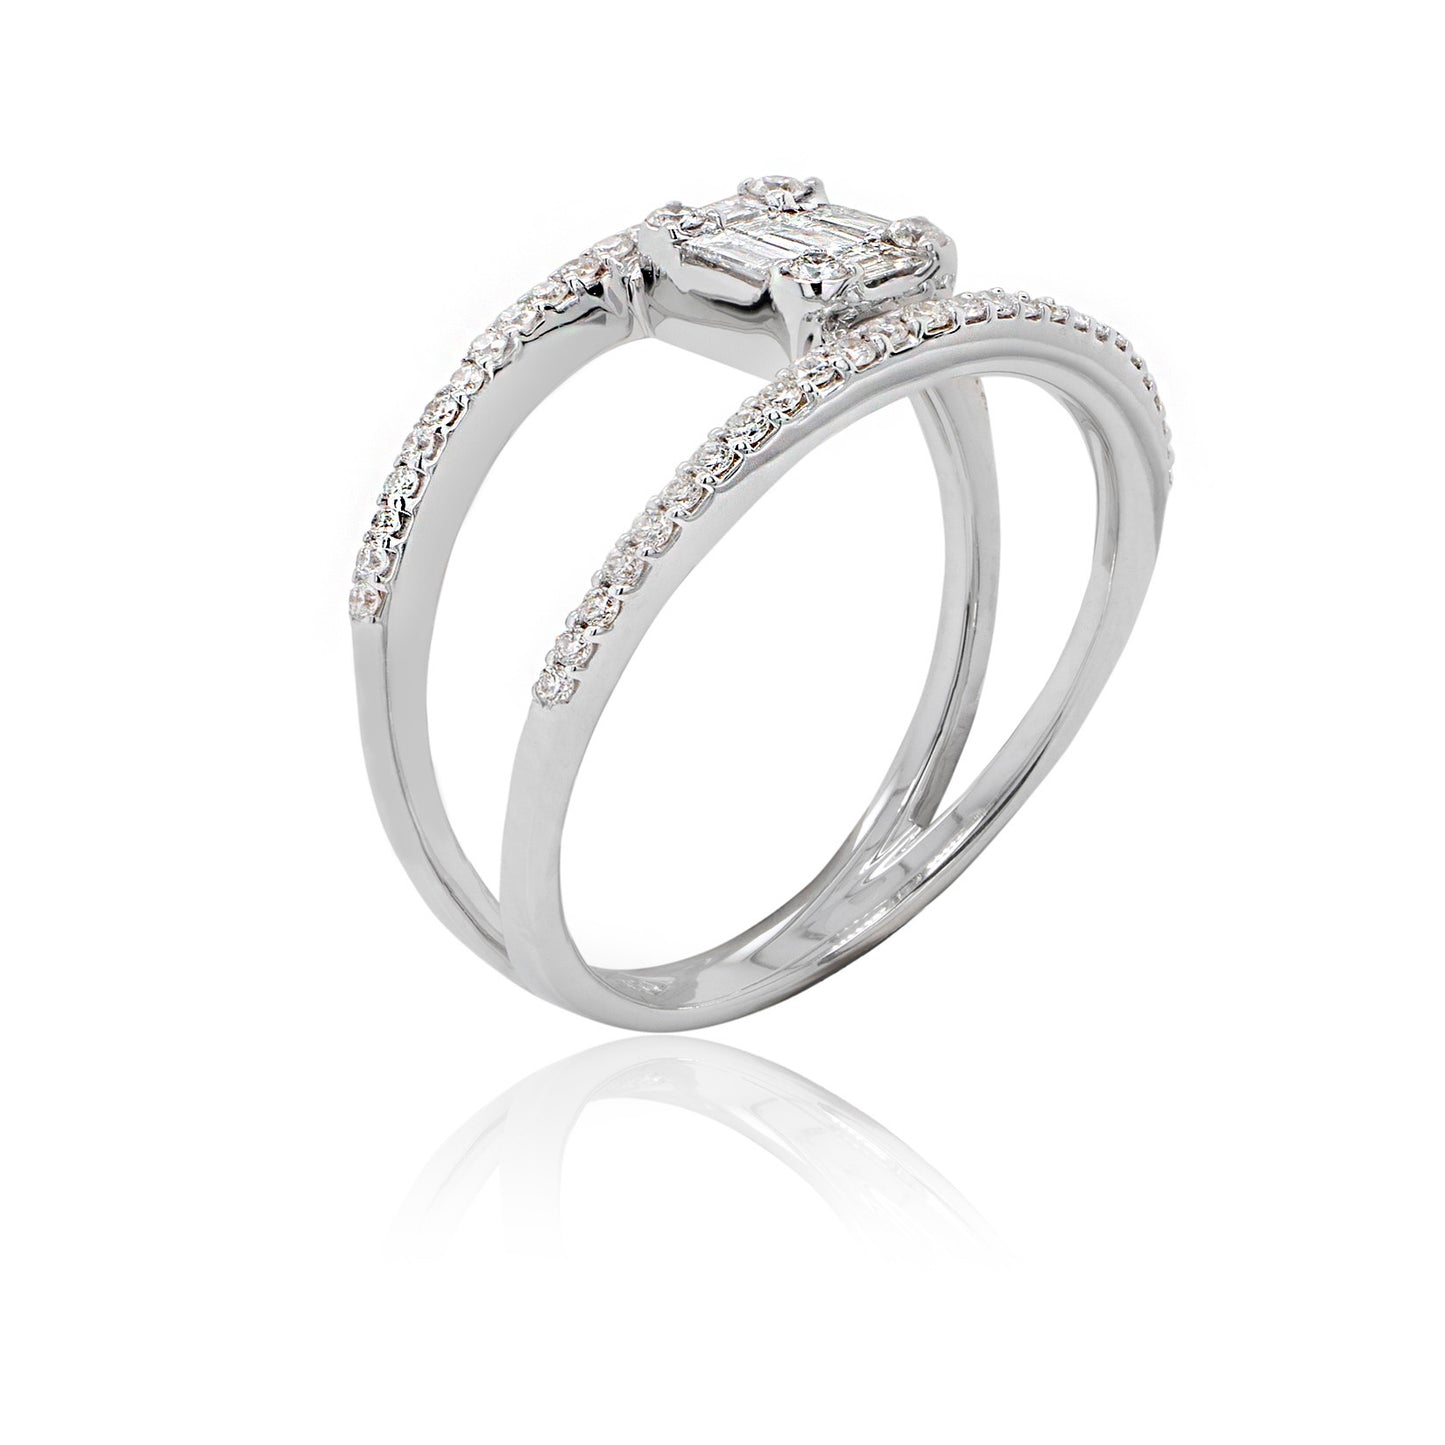 Lady's 18 Karat White Gold Geometric Diamond Fashion Ring